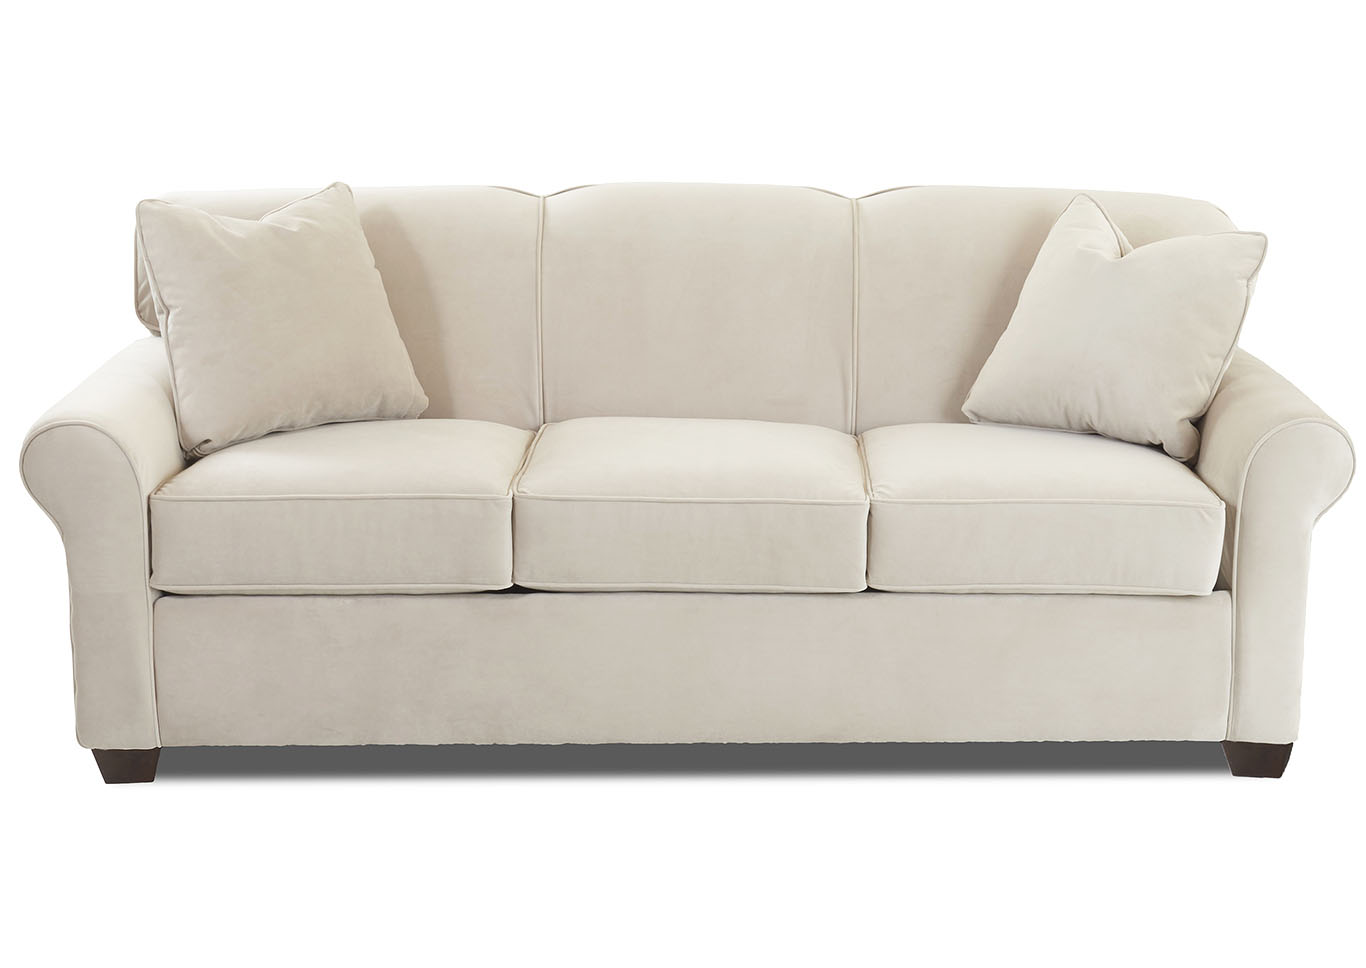 Mayhew White Sleeper Fabric Sofa,Klaussner Home Furnishings